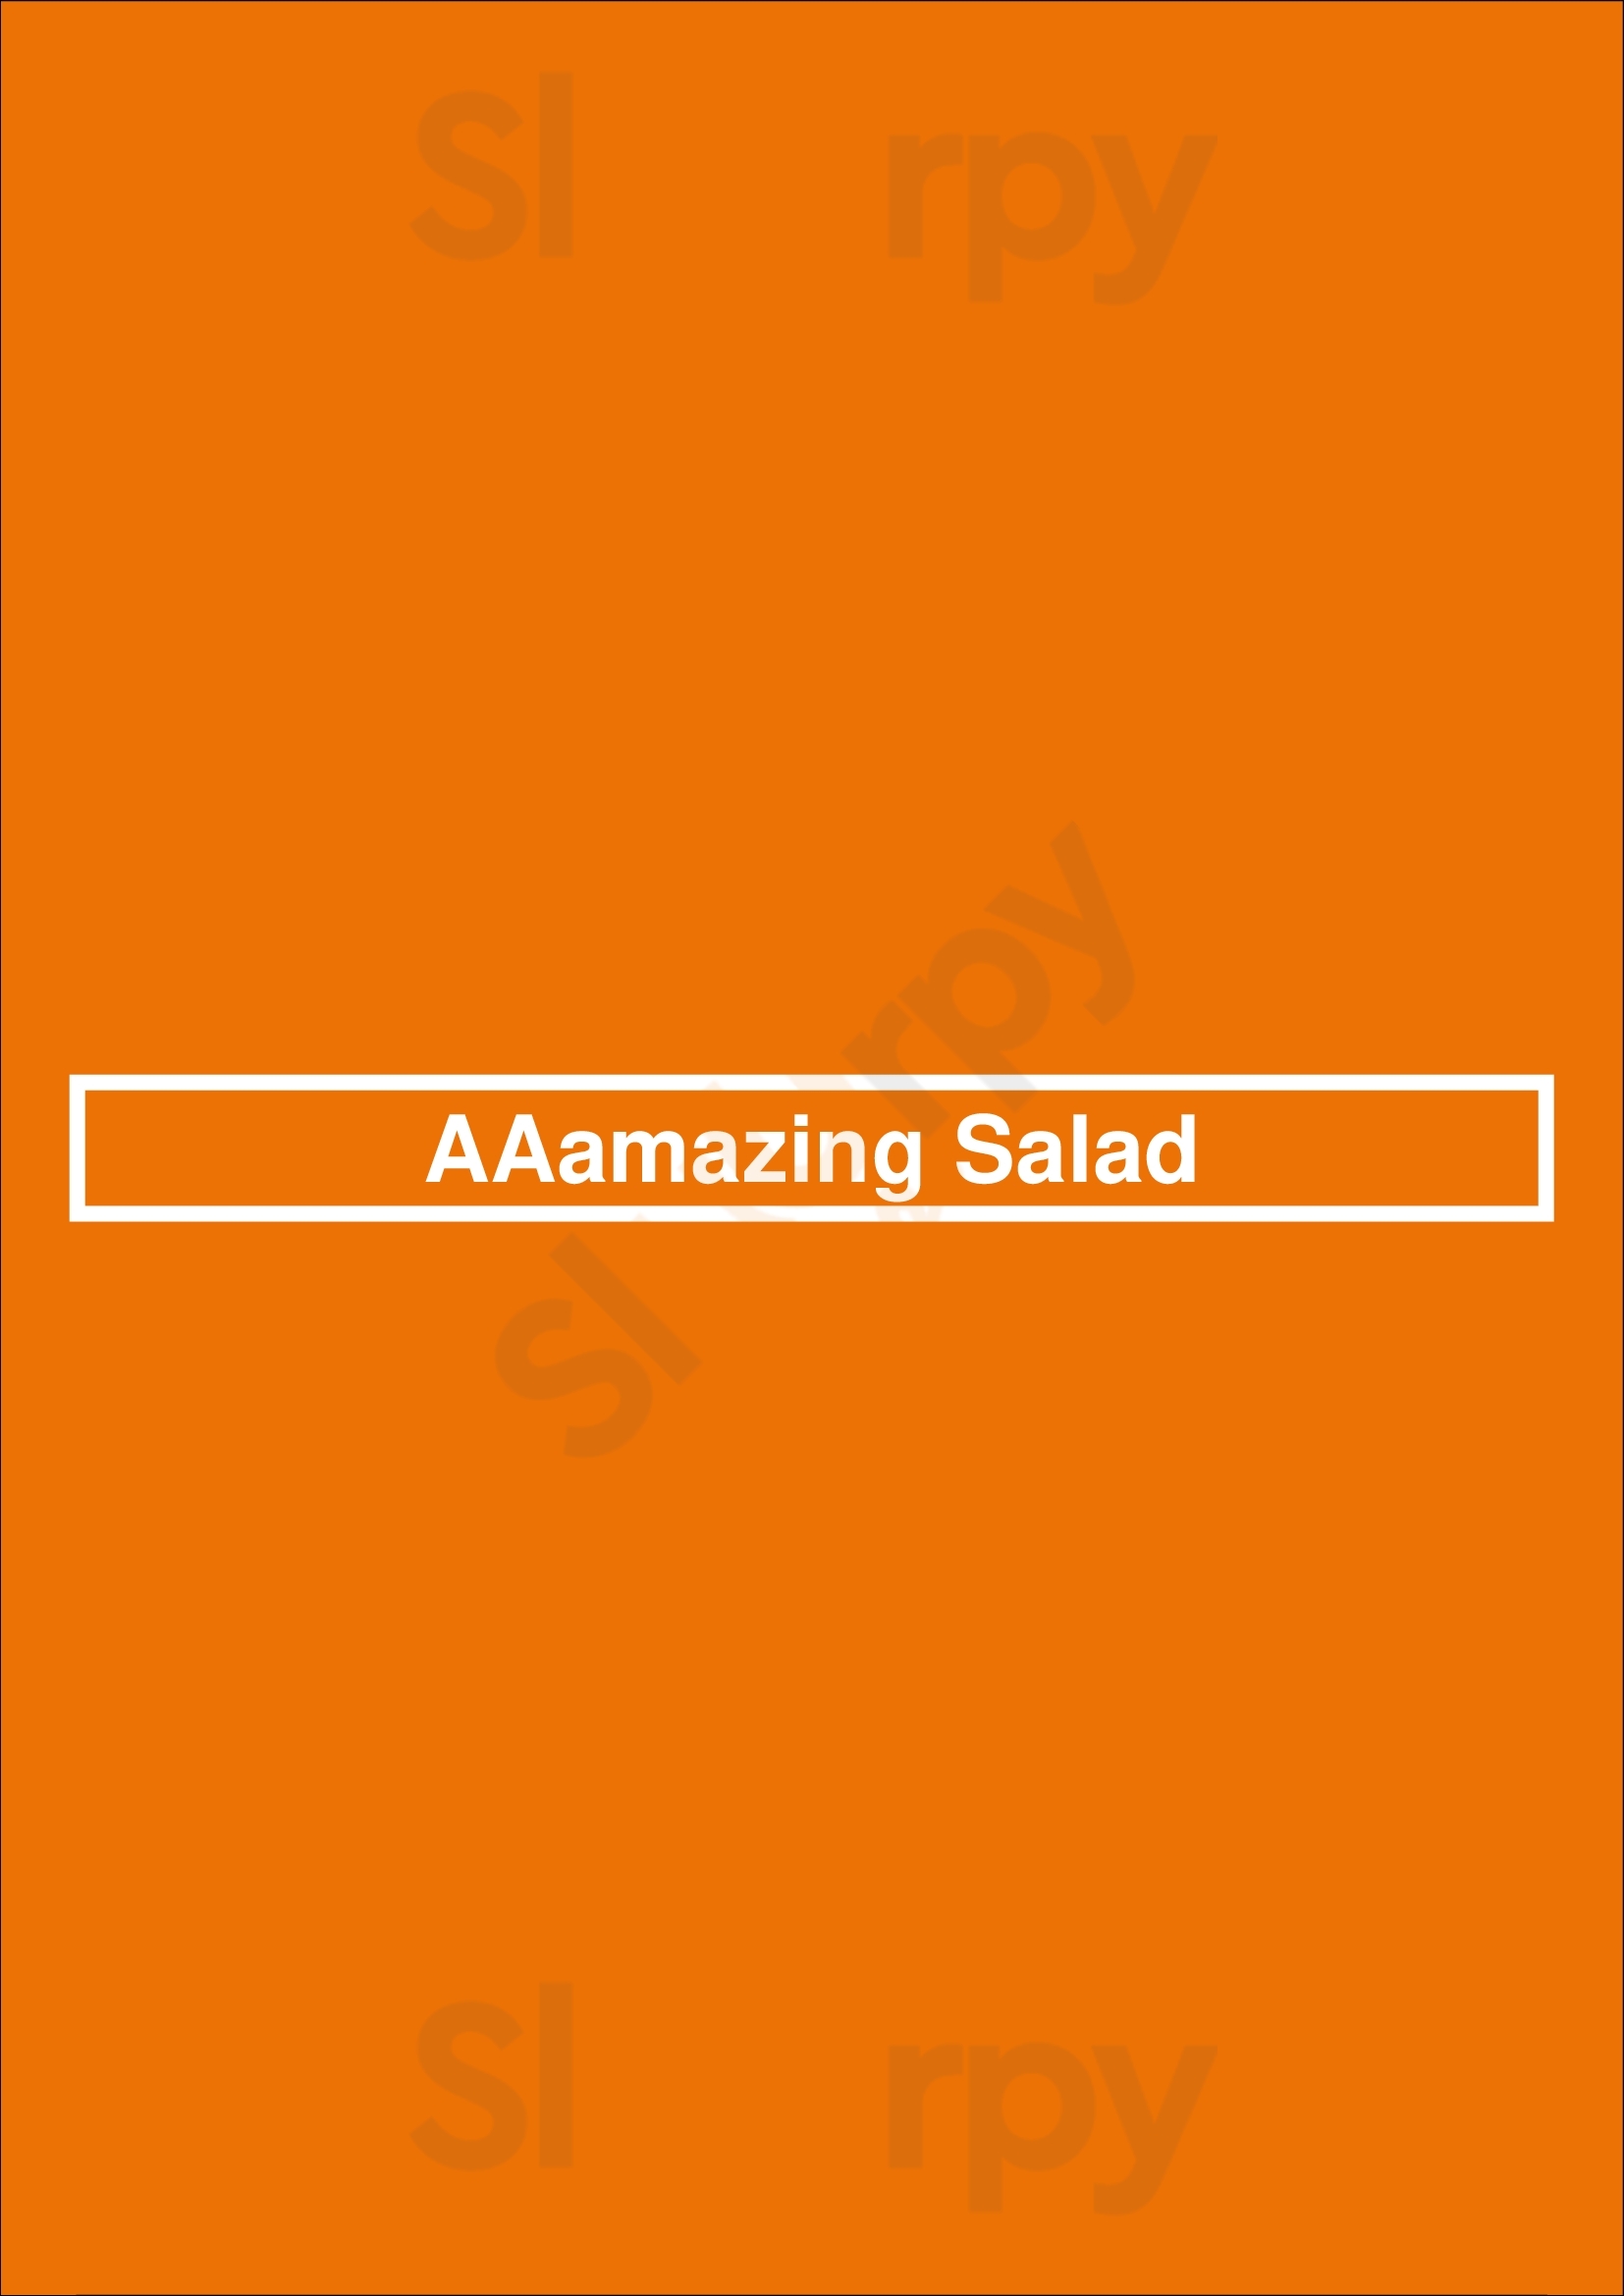 Aaamazing Salad Toronto Menu - 1